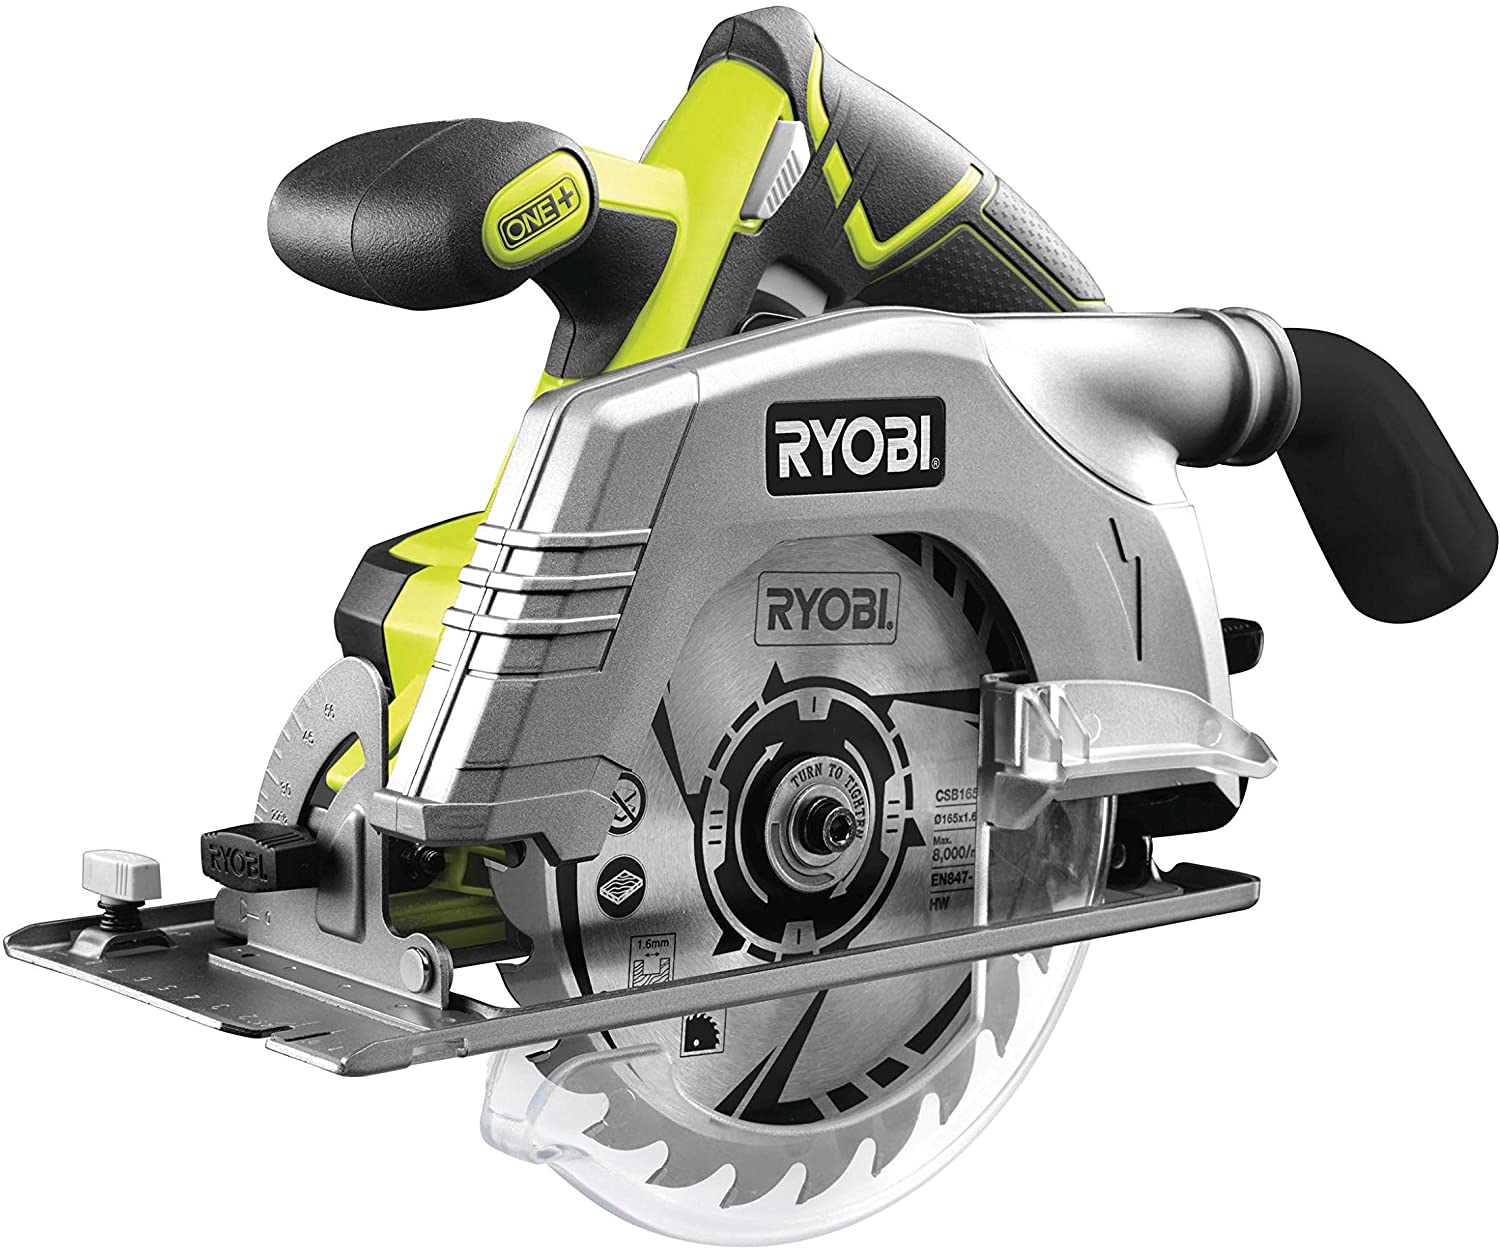 Ryobi R18CS-0 ONE+ 18 V Cordless Circular Saw, 165 mm (Body Only)